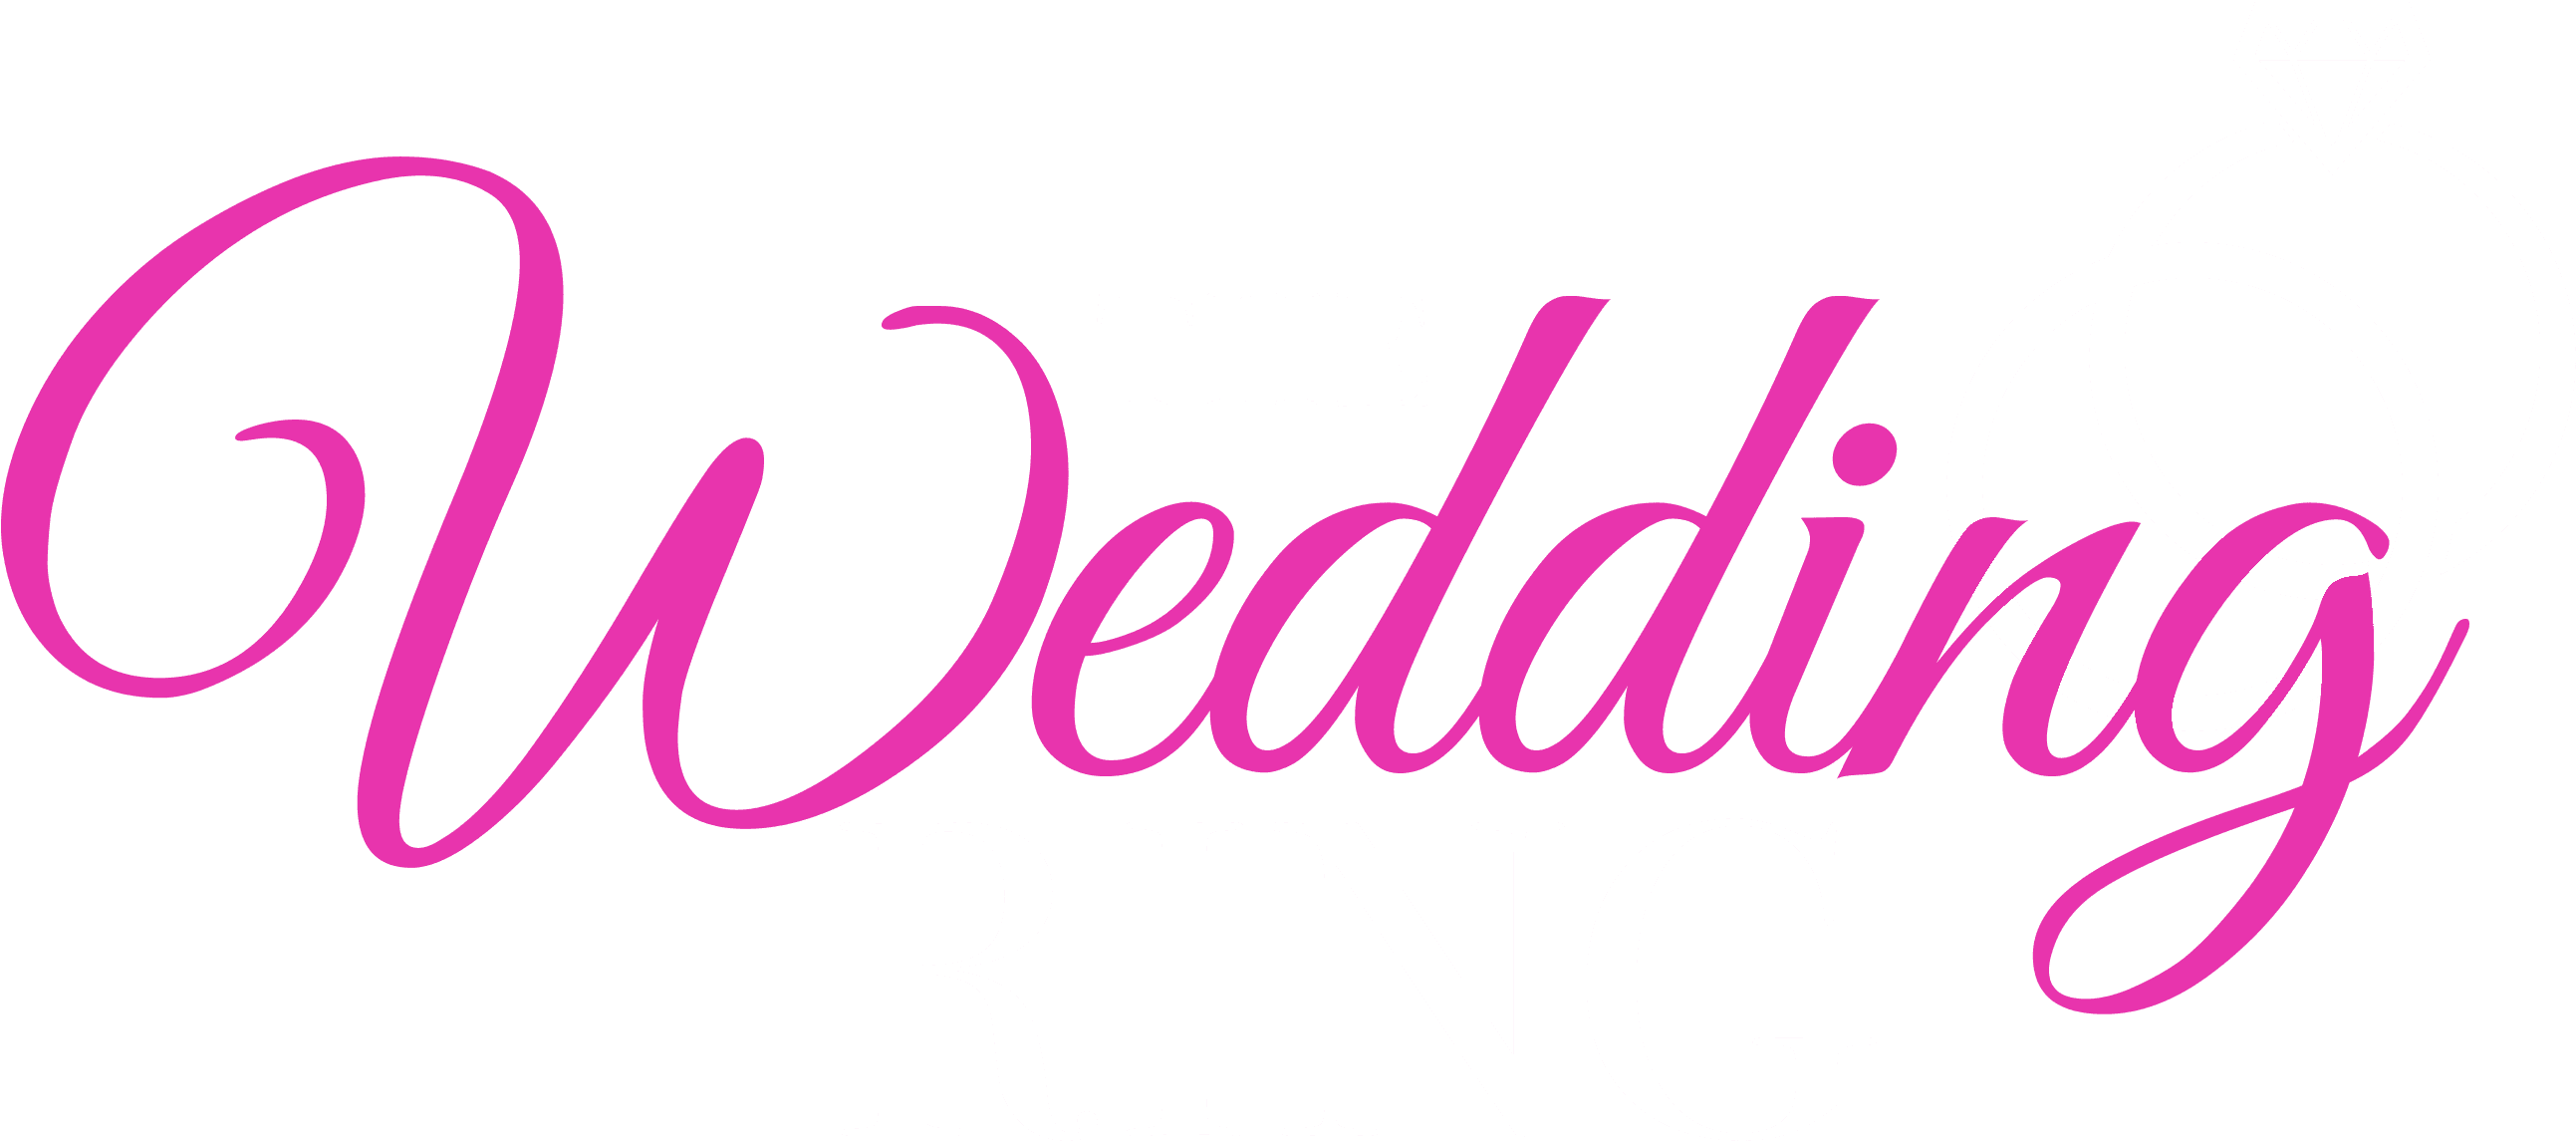 The Wedding Ring logo